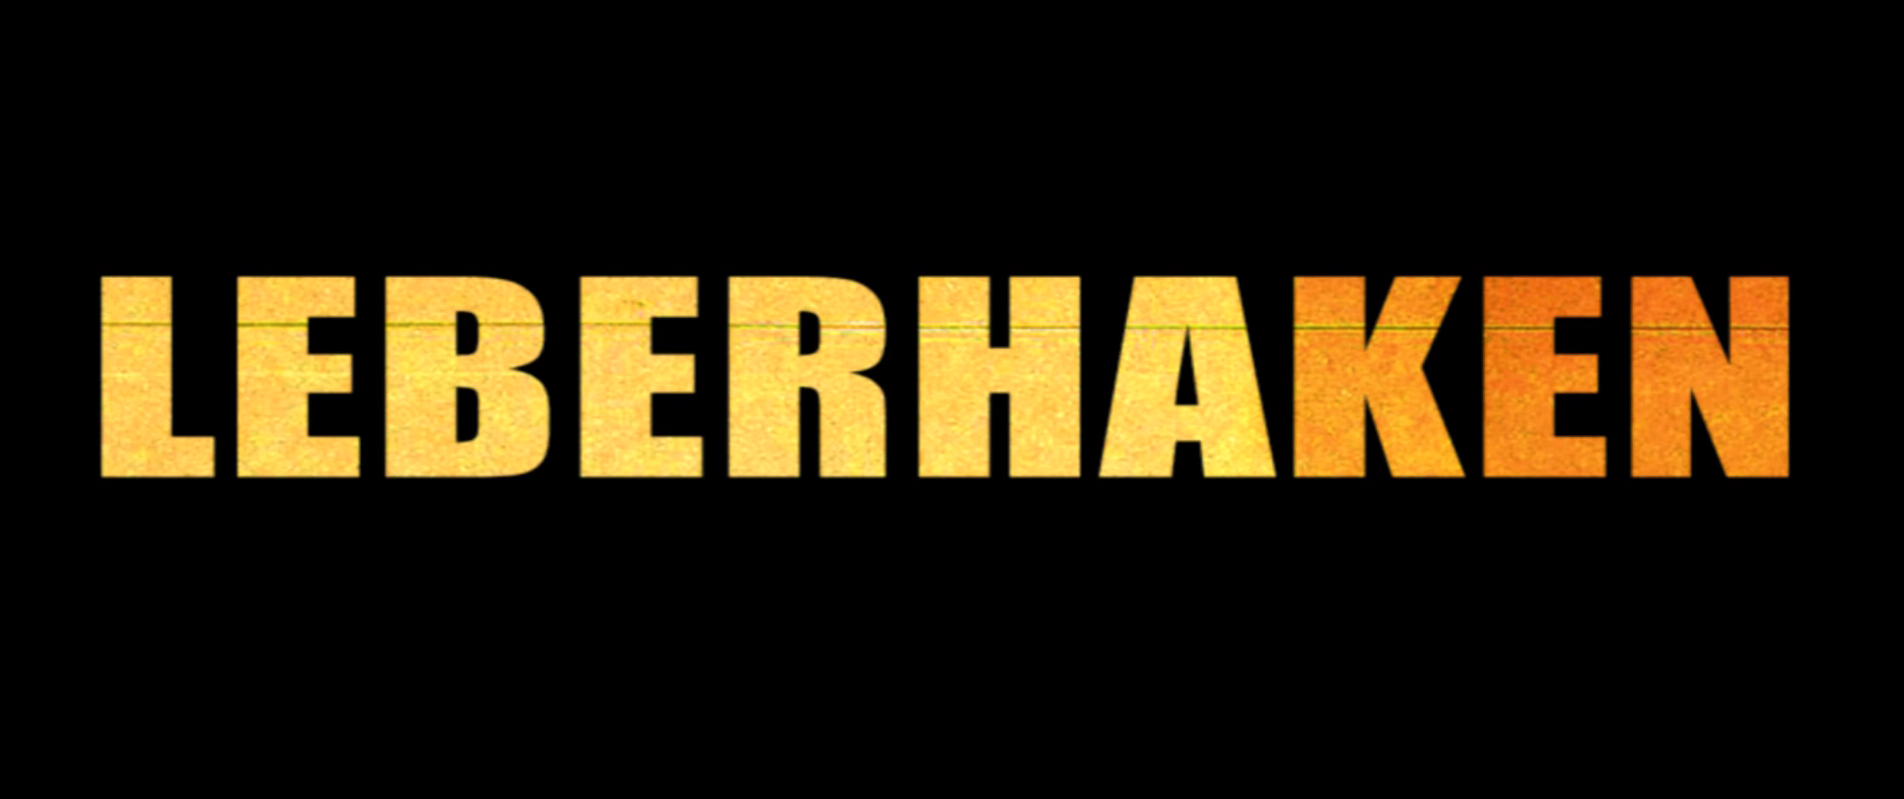 Feature film Leberhaken “Uppercut” – filmed by cinematographer Maher Maleh